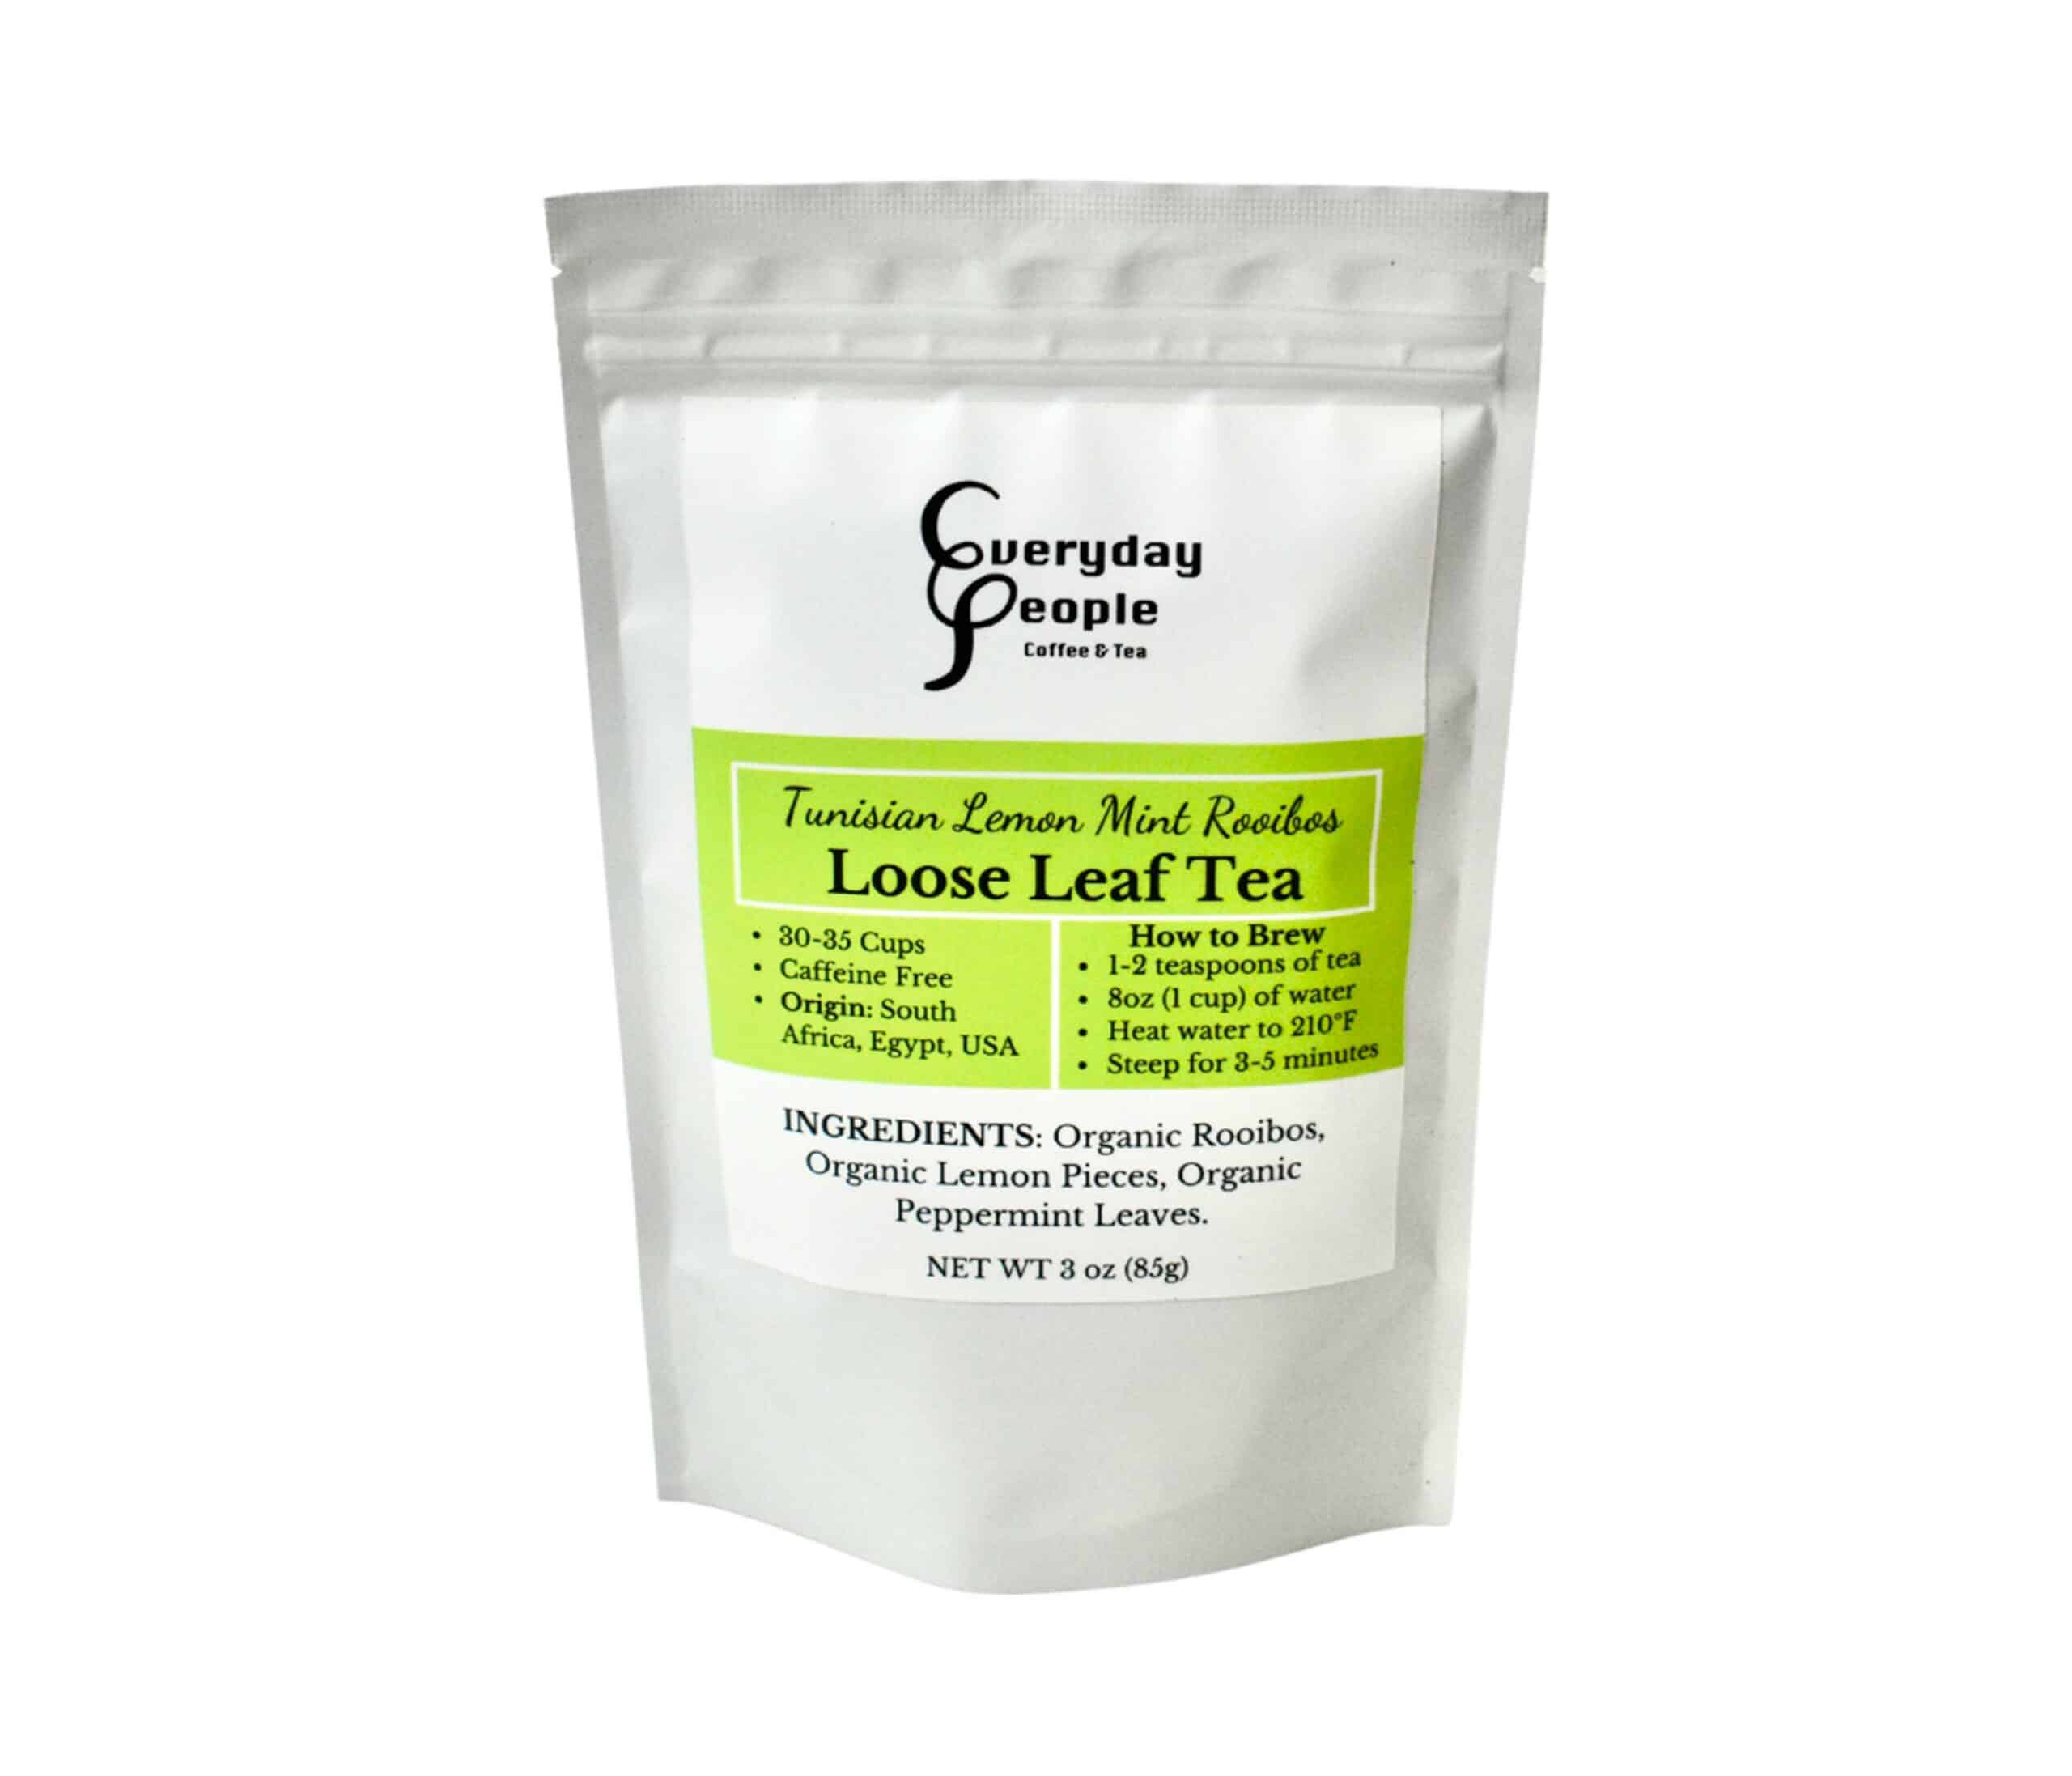 Buy Three Mint Organic Herbal Tea